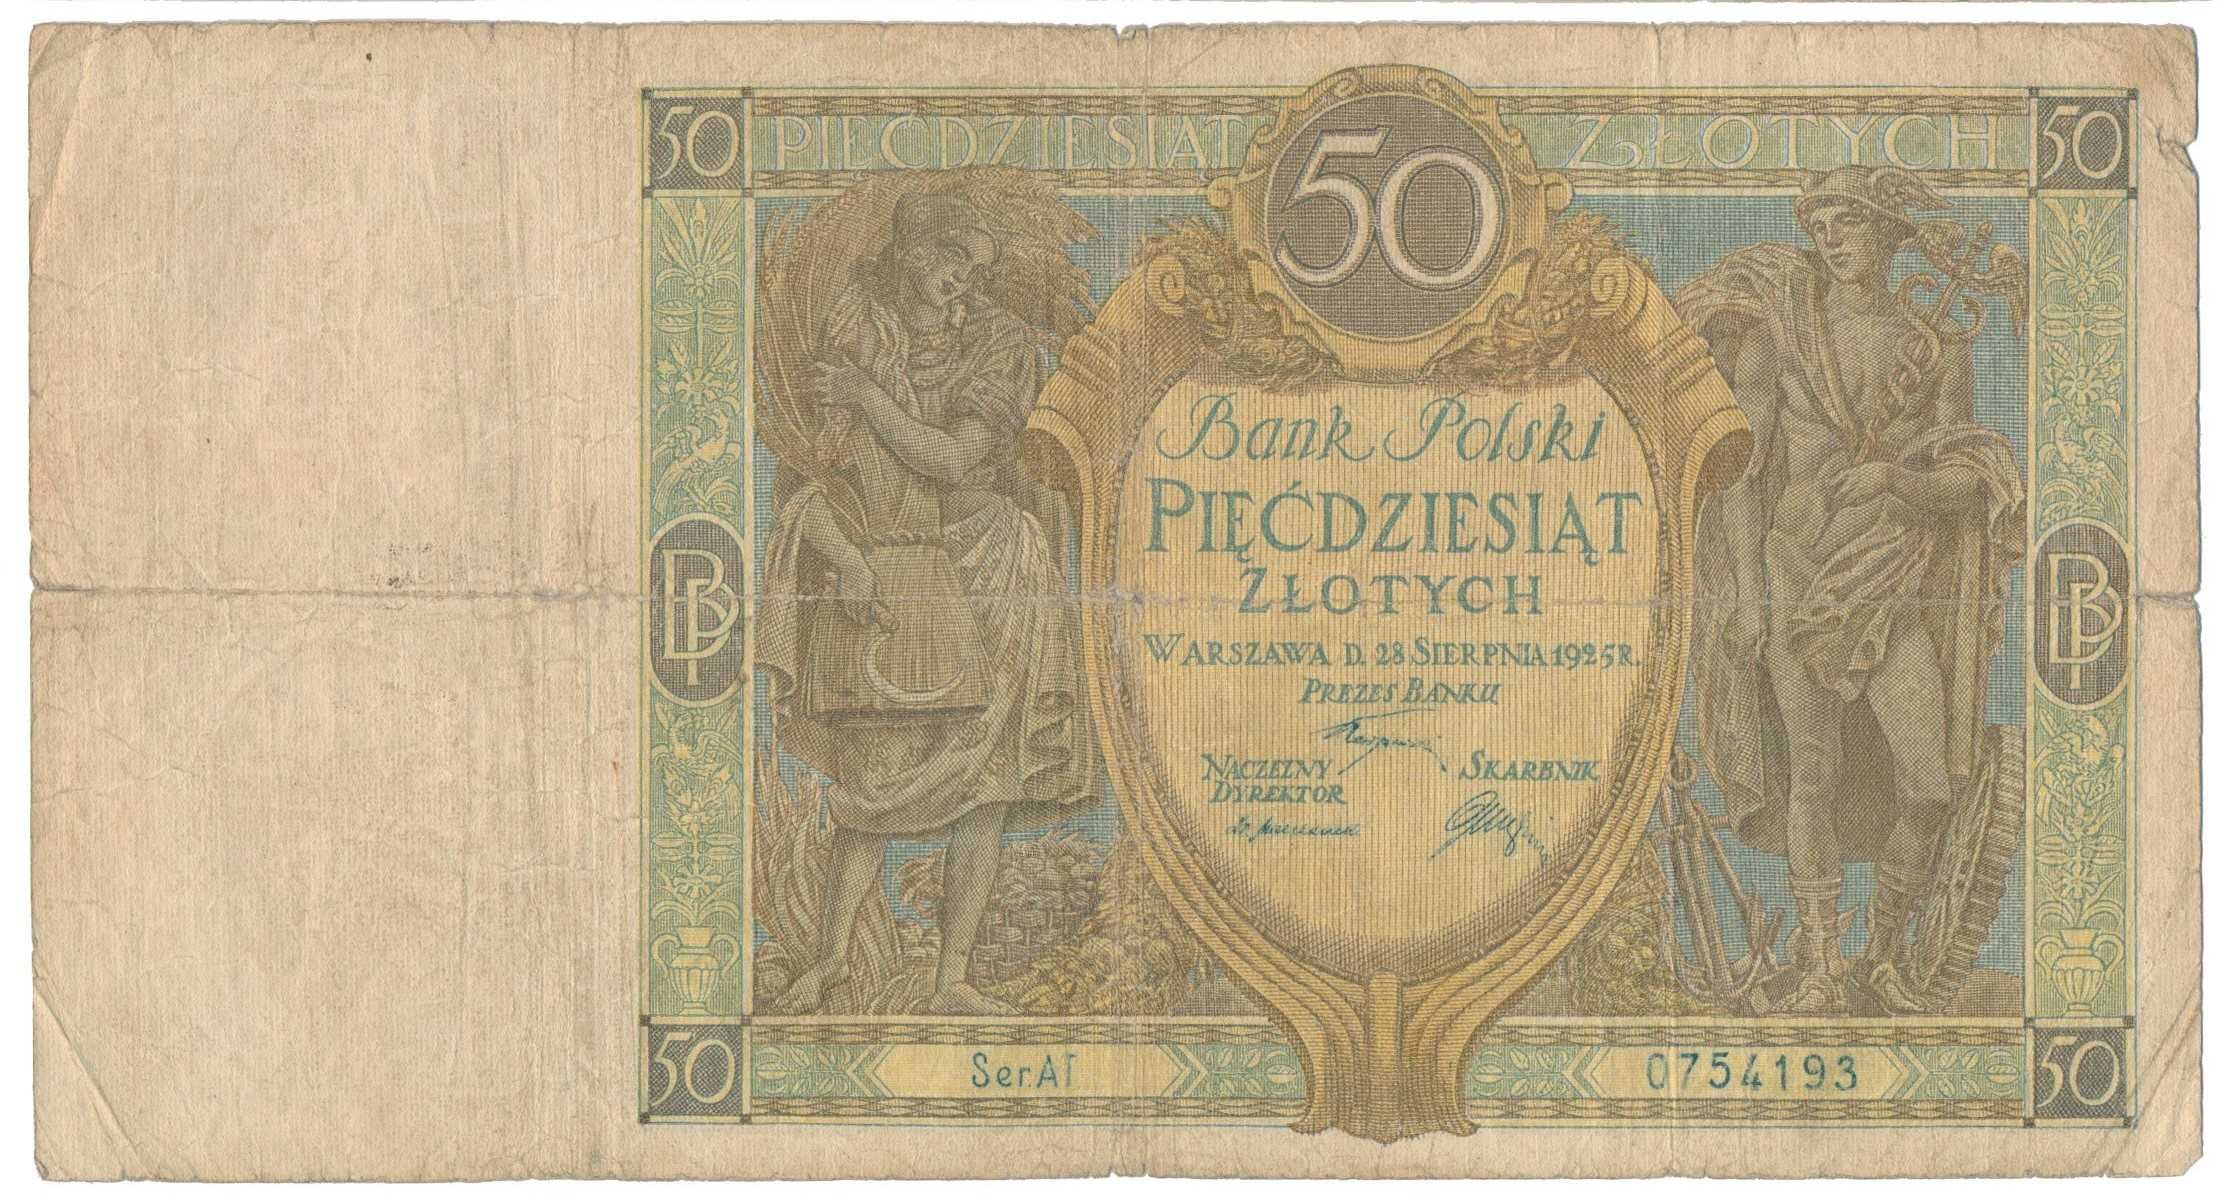 50 zł 1925 seria AT !! rzadki banknot !! !! !! !! !!